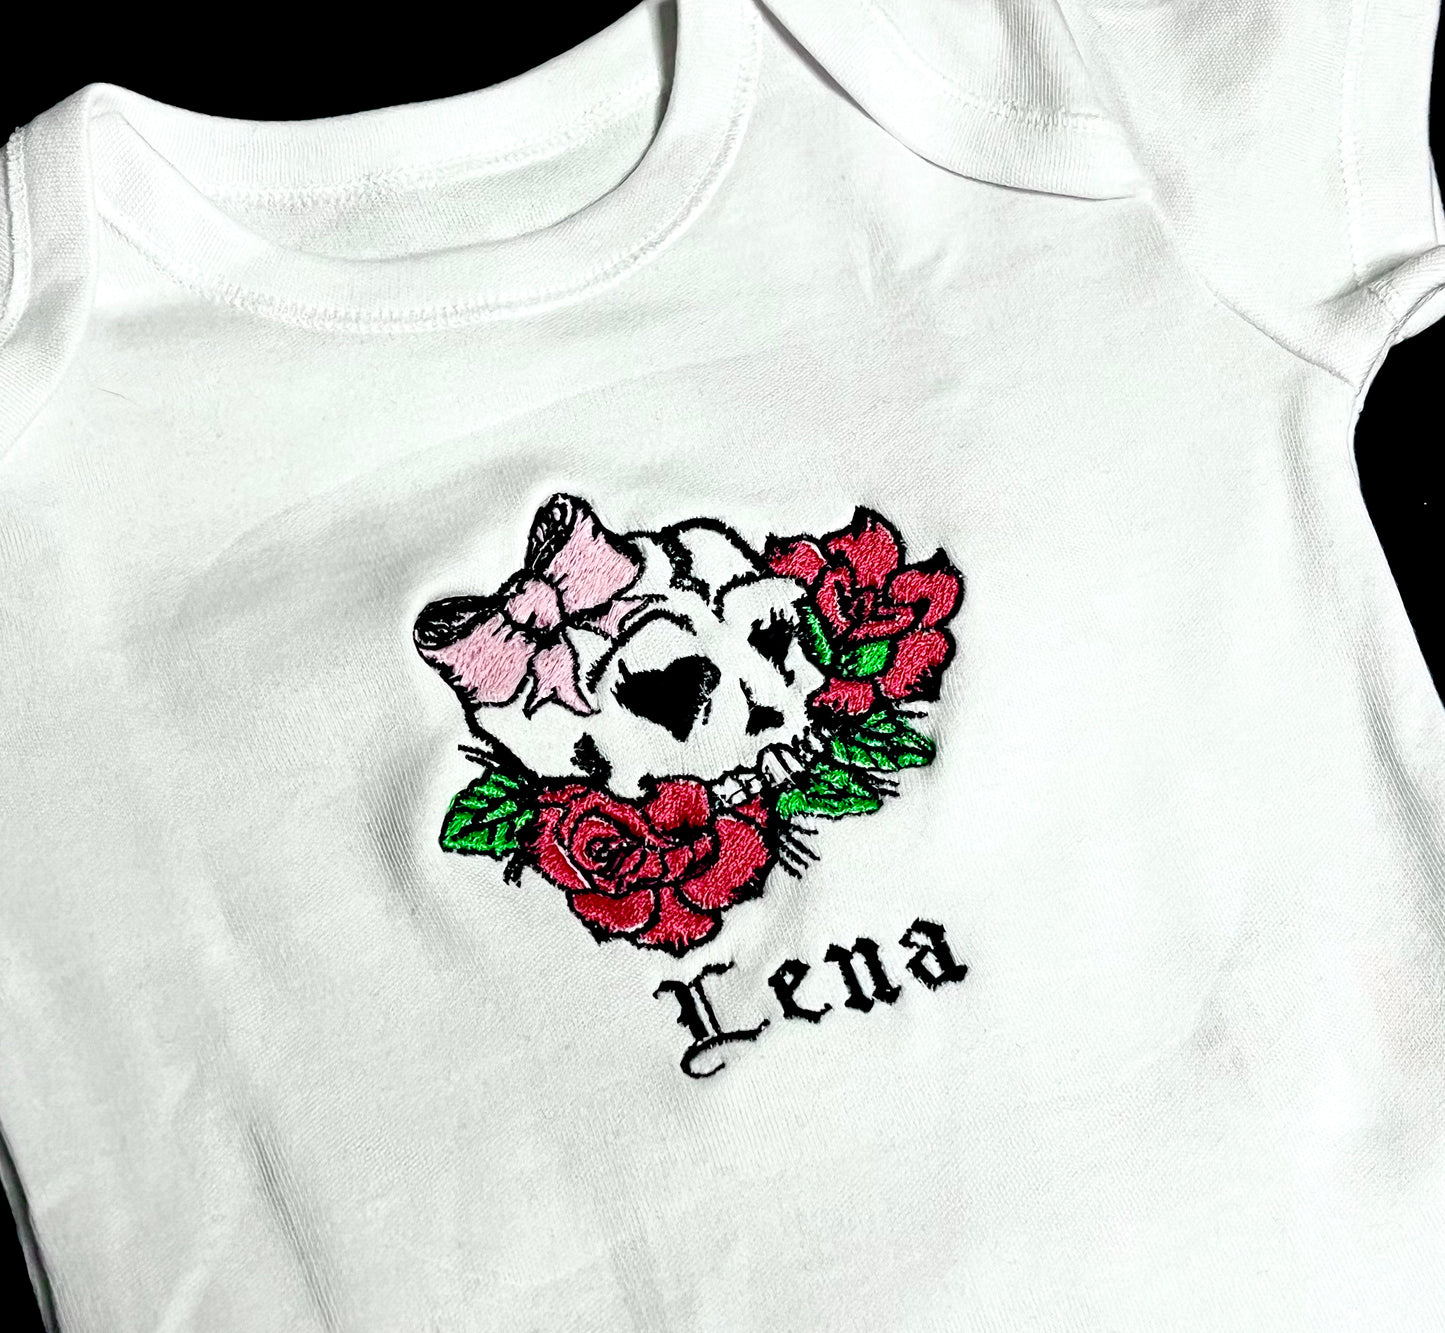 Personalised Skull & Roses Baby Grow